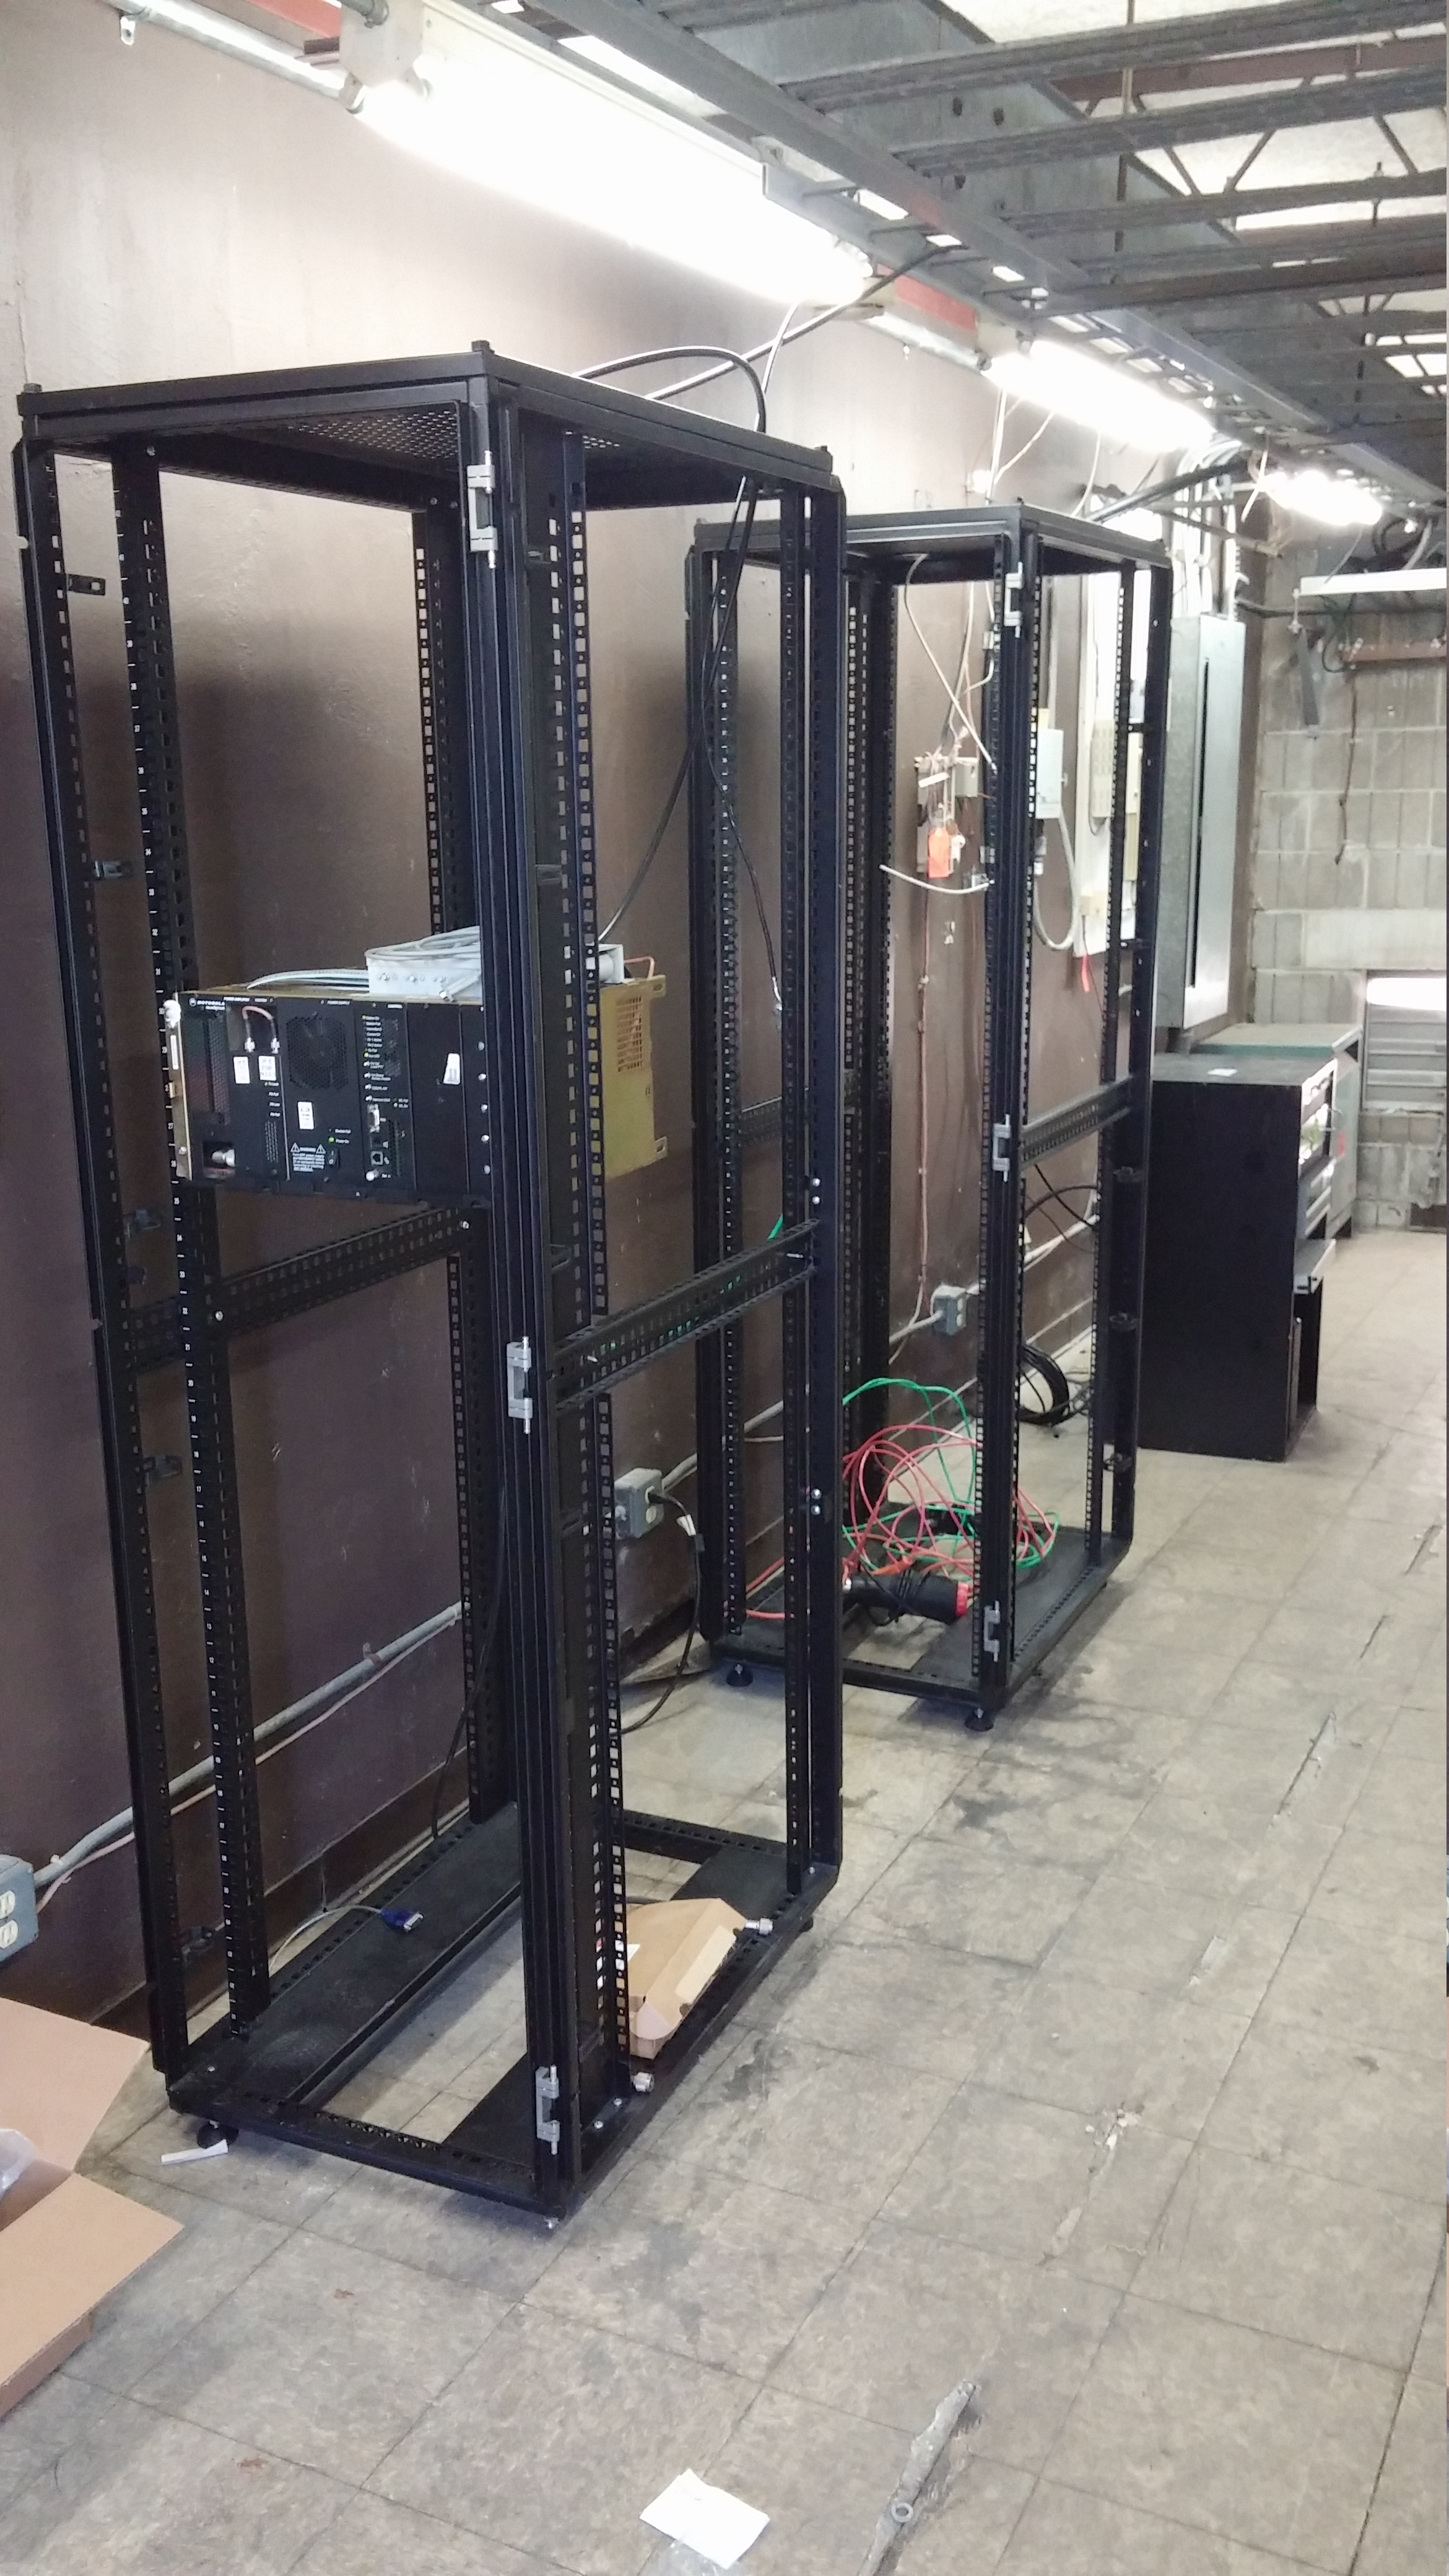 Quantar installed in rack